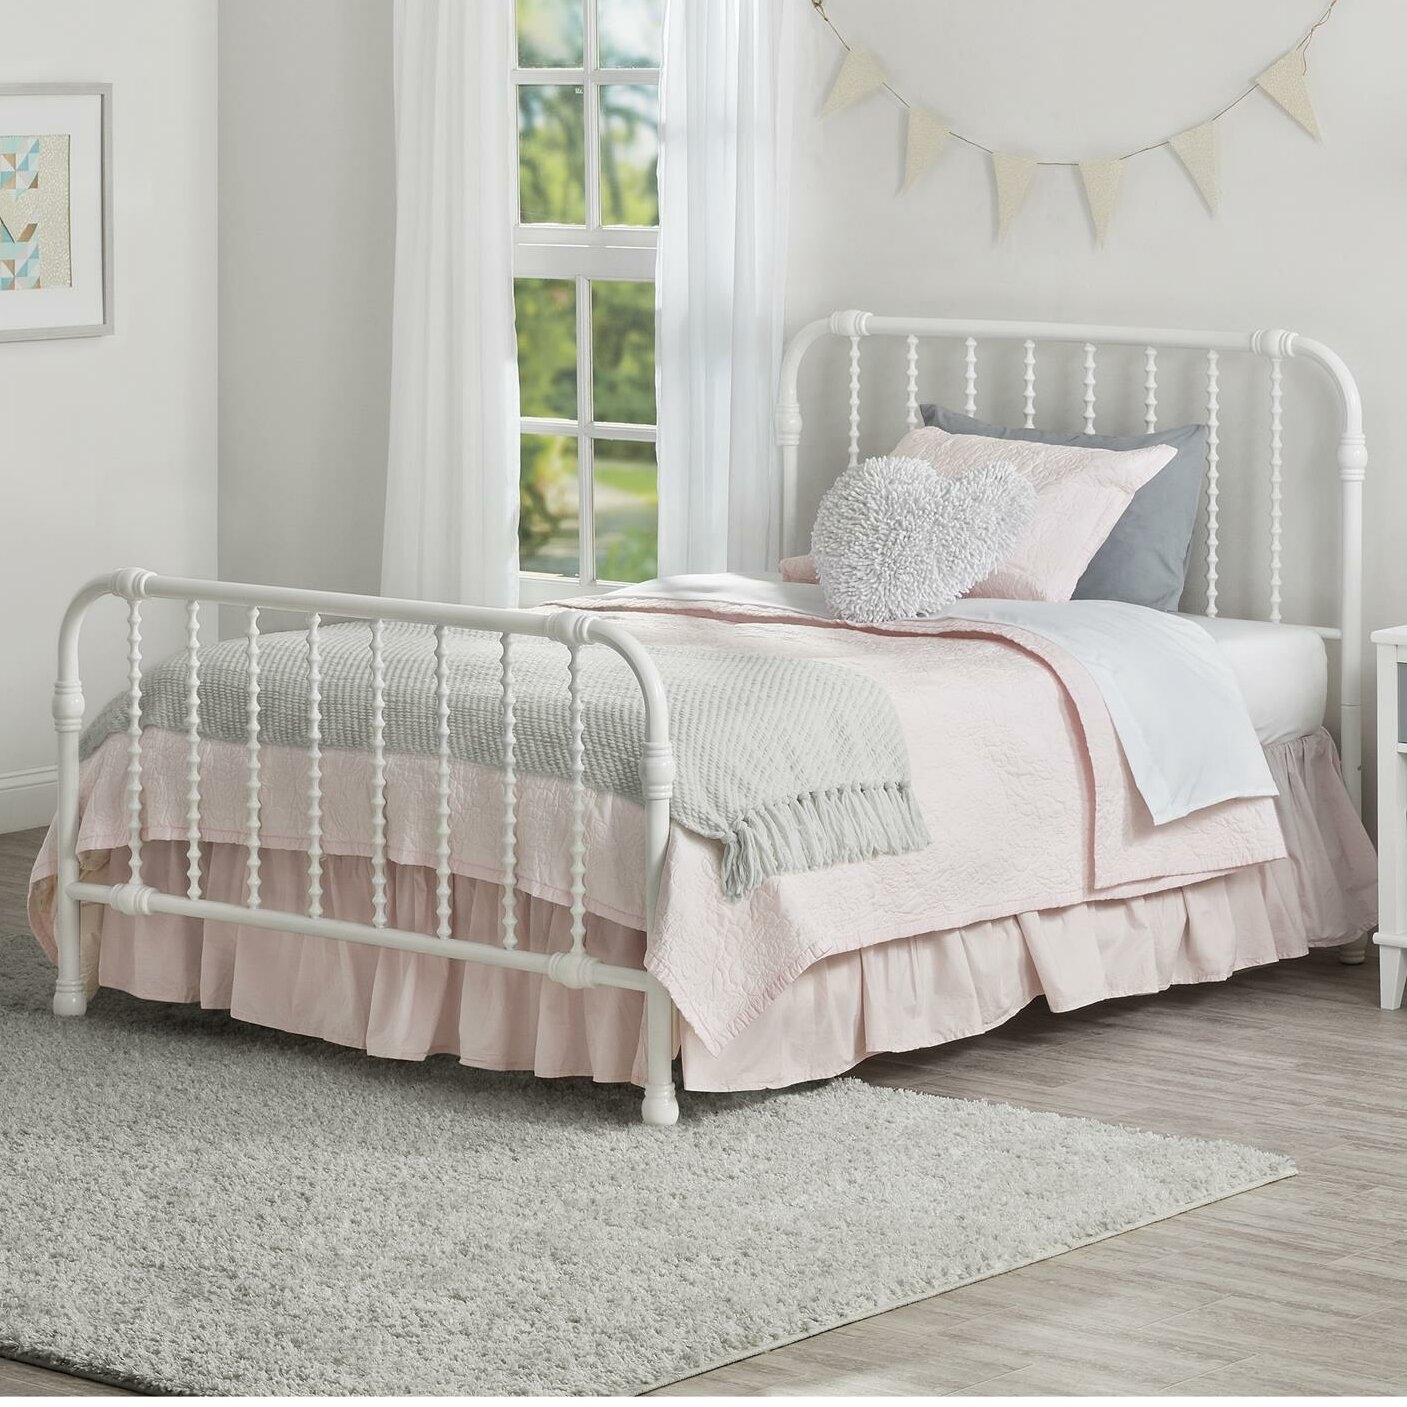 Monarch Hill Wren Bed - Bright White - Full - Image 0